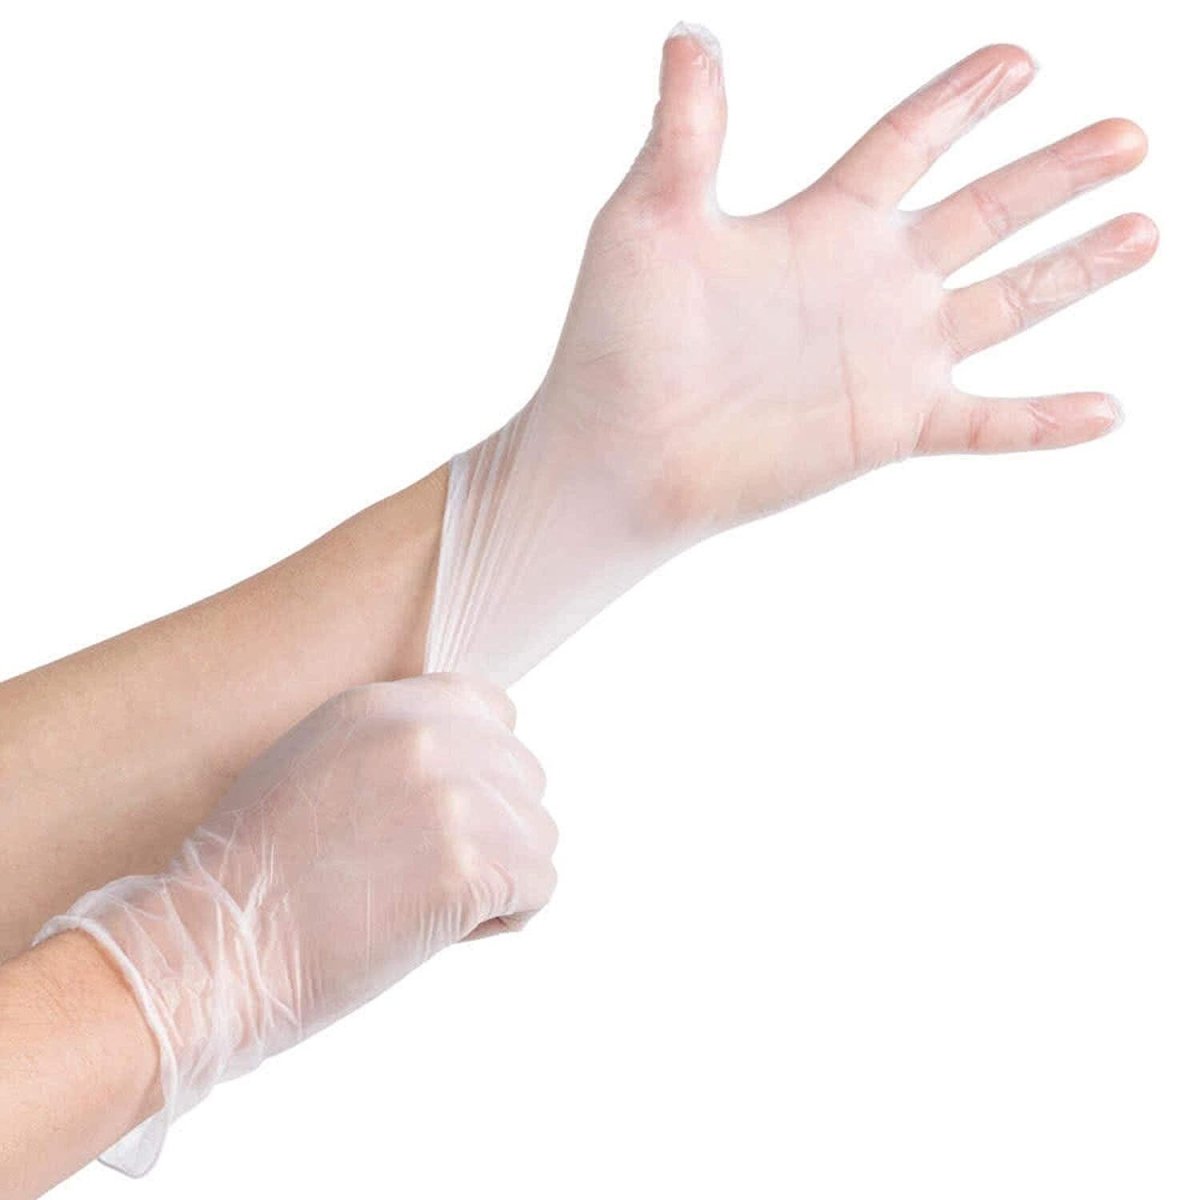 Alliance Medical Grade Vinyl Disposable Gloves Medium, Powder-Free, Latex Free